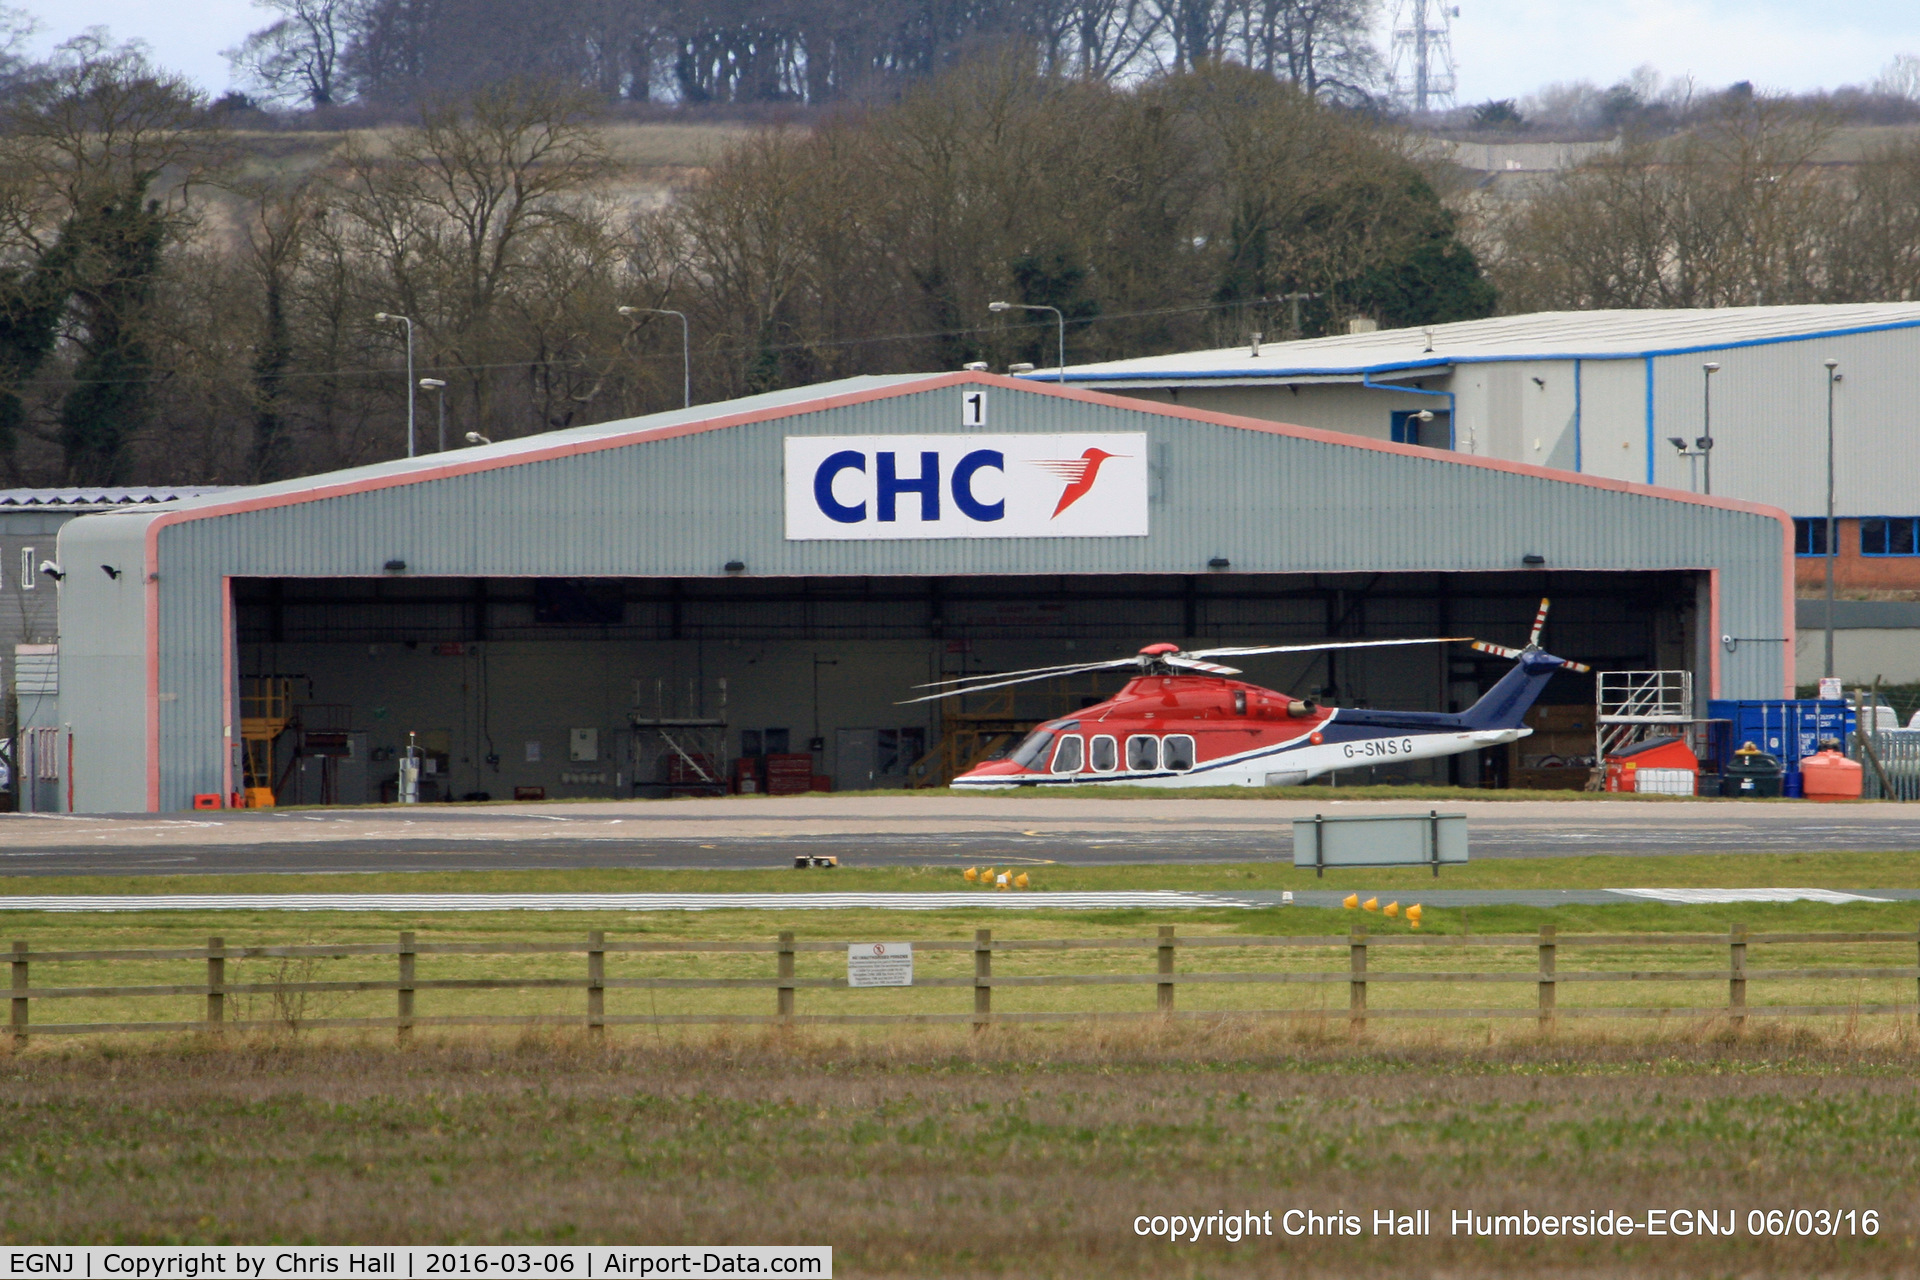 Humberside Airport, Kingston upon Hull, England United Kingdom (EGNJ) - CHC hangar at Humberside